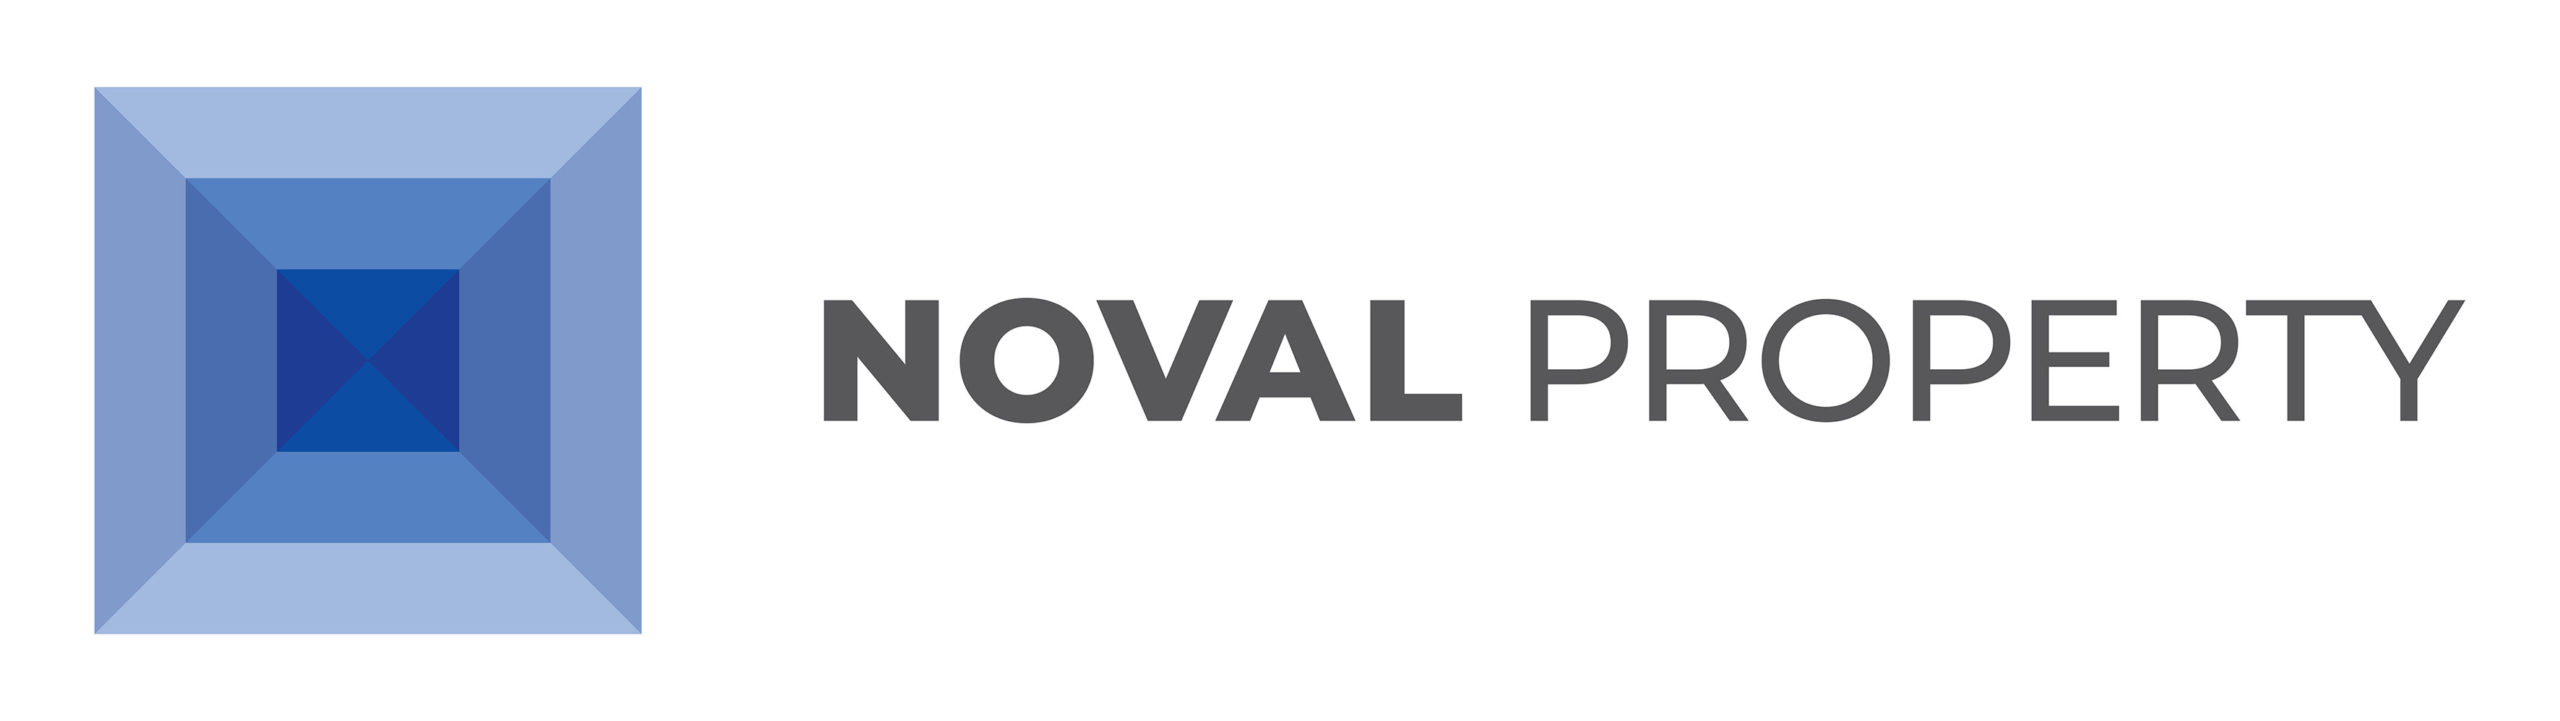 Noval Property: Μεταξύ 2,60% και 2,95% το εύρος απόδοσης των ομολογιών του ΚΟΔ